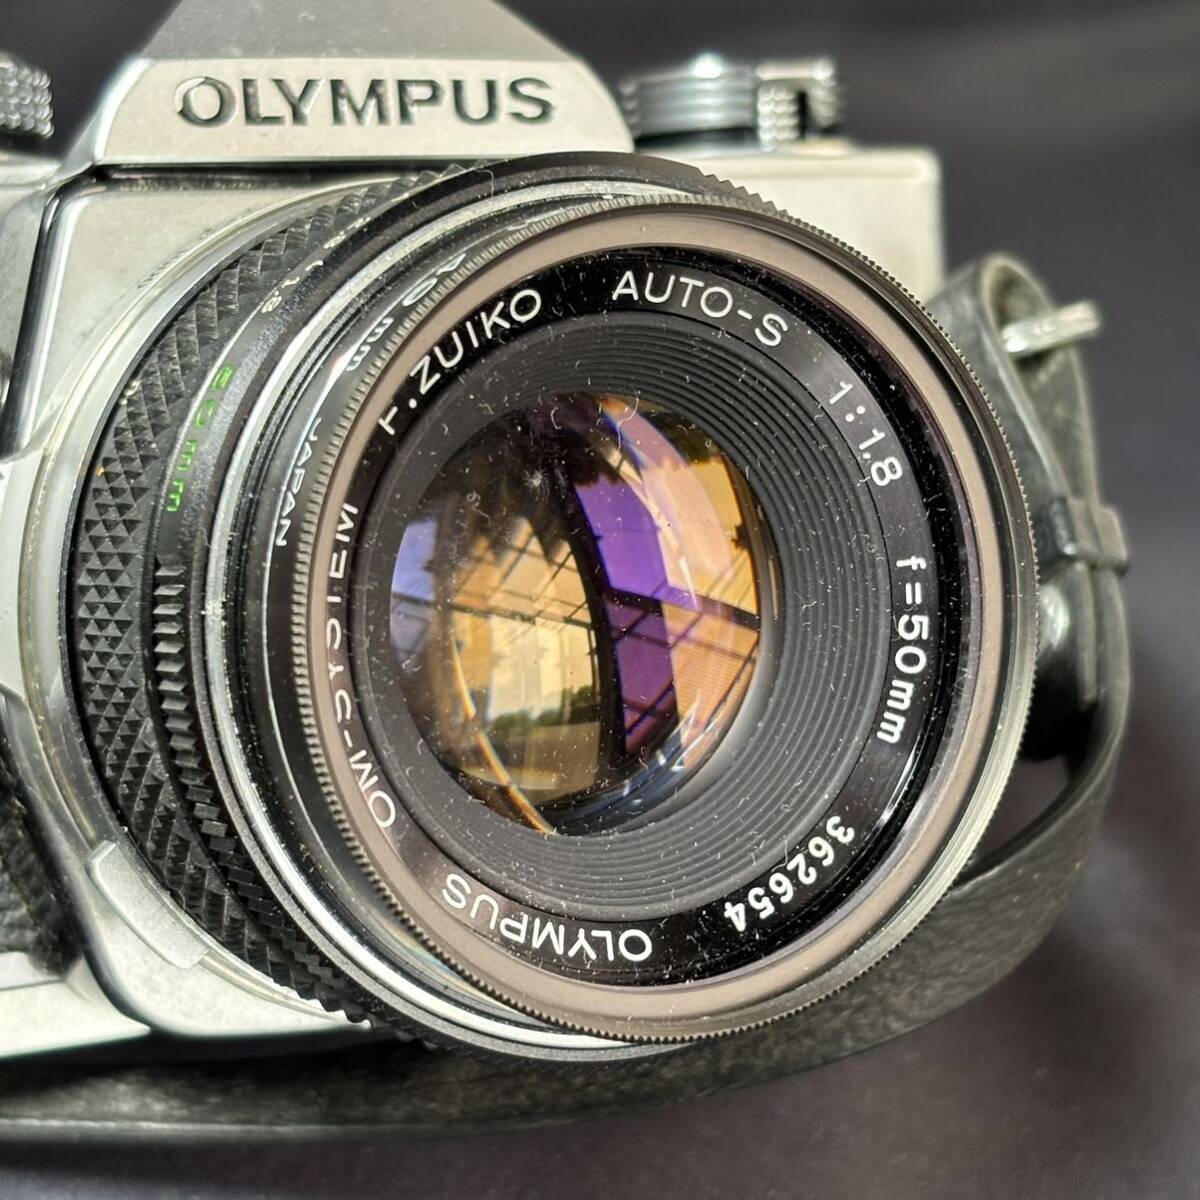 OLYMPUS オリンパス OM-1 一眼レフ フィルムカメラ/カメラレンズ OLYMPUS OM-SYSTEM F.ZUIKO AUTO-S 1:1.8 f=50mm 空シャッターOKの画像9